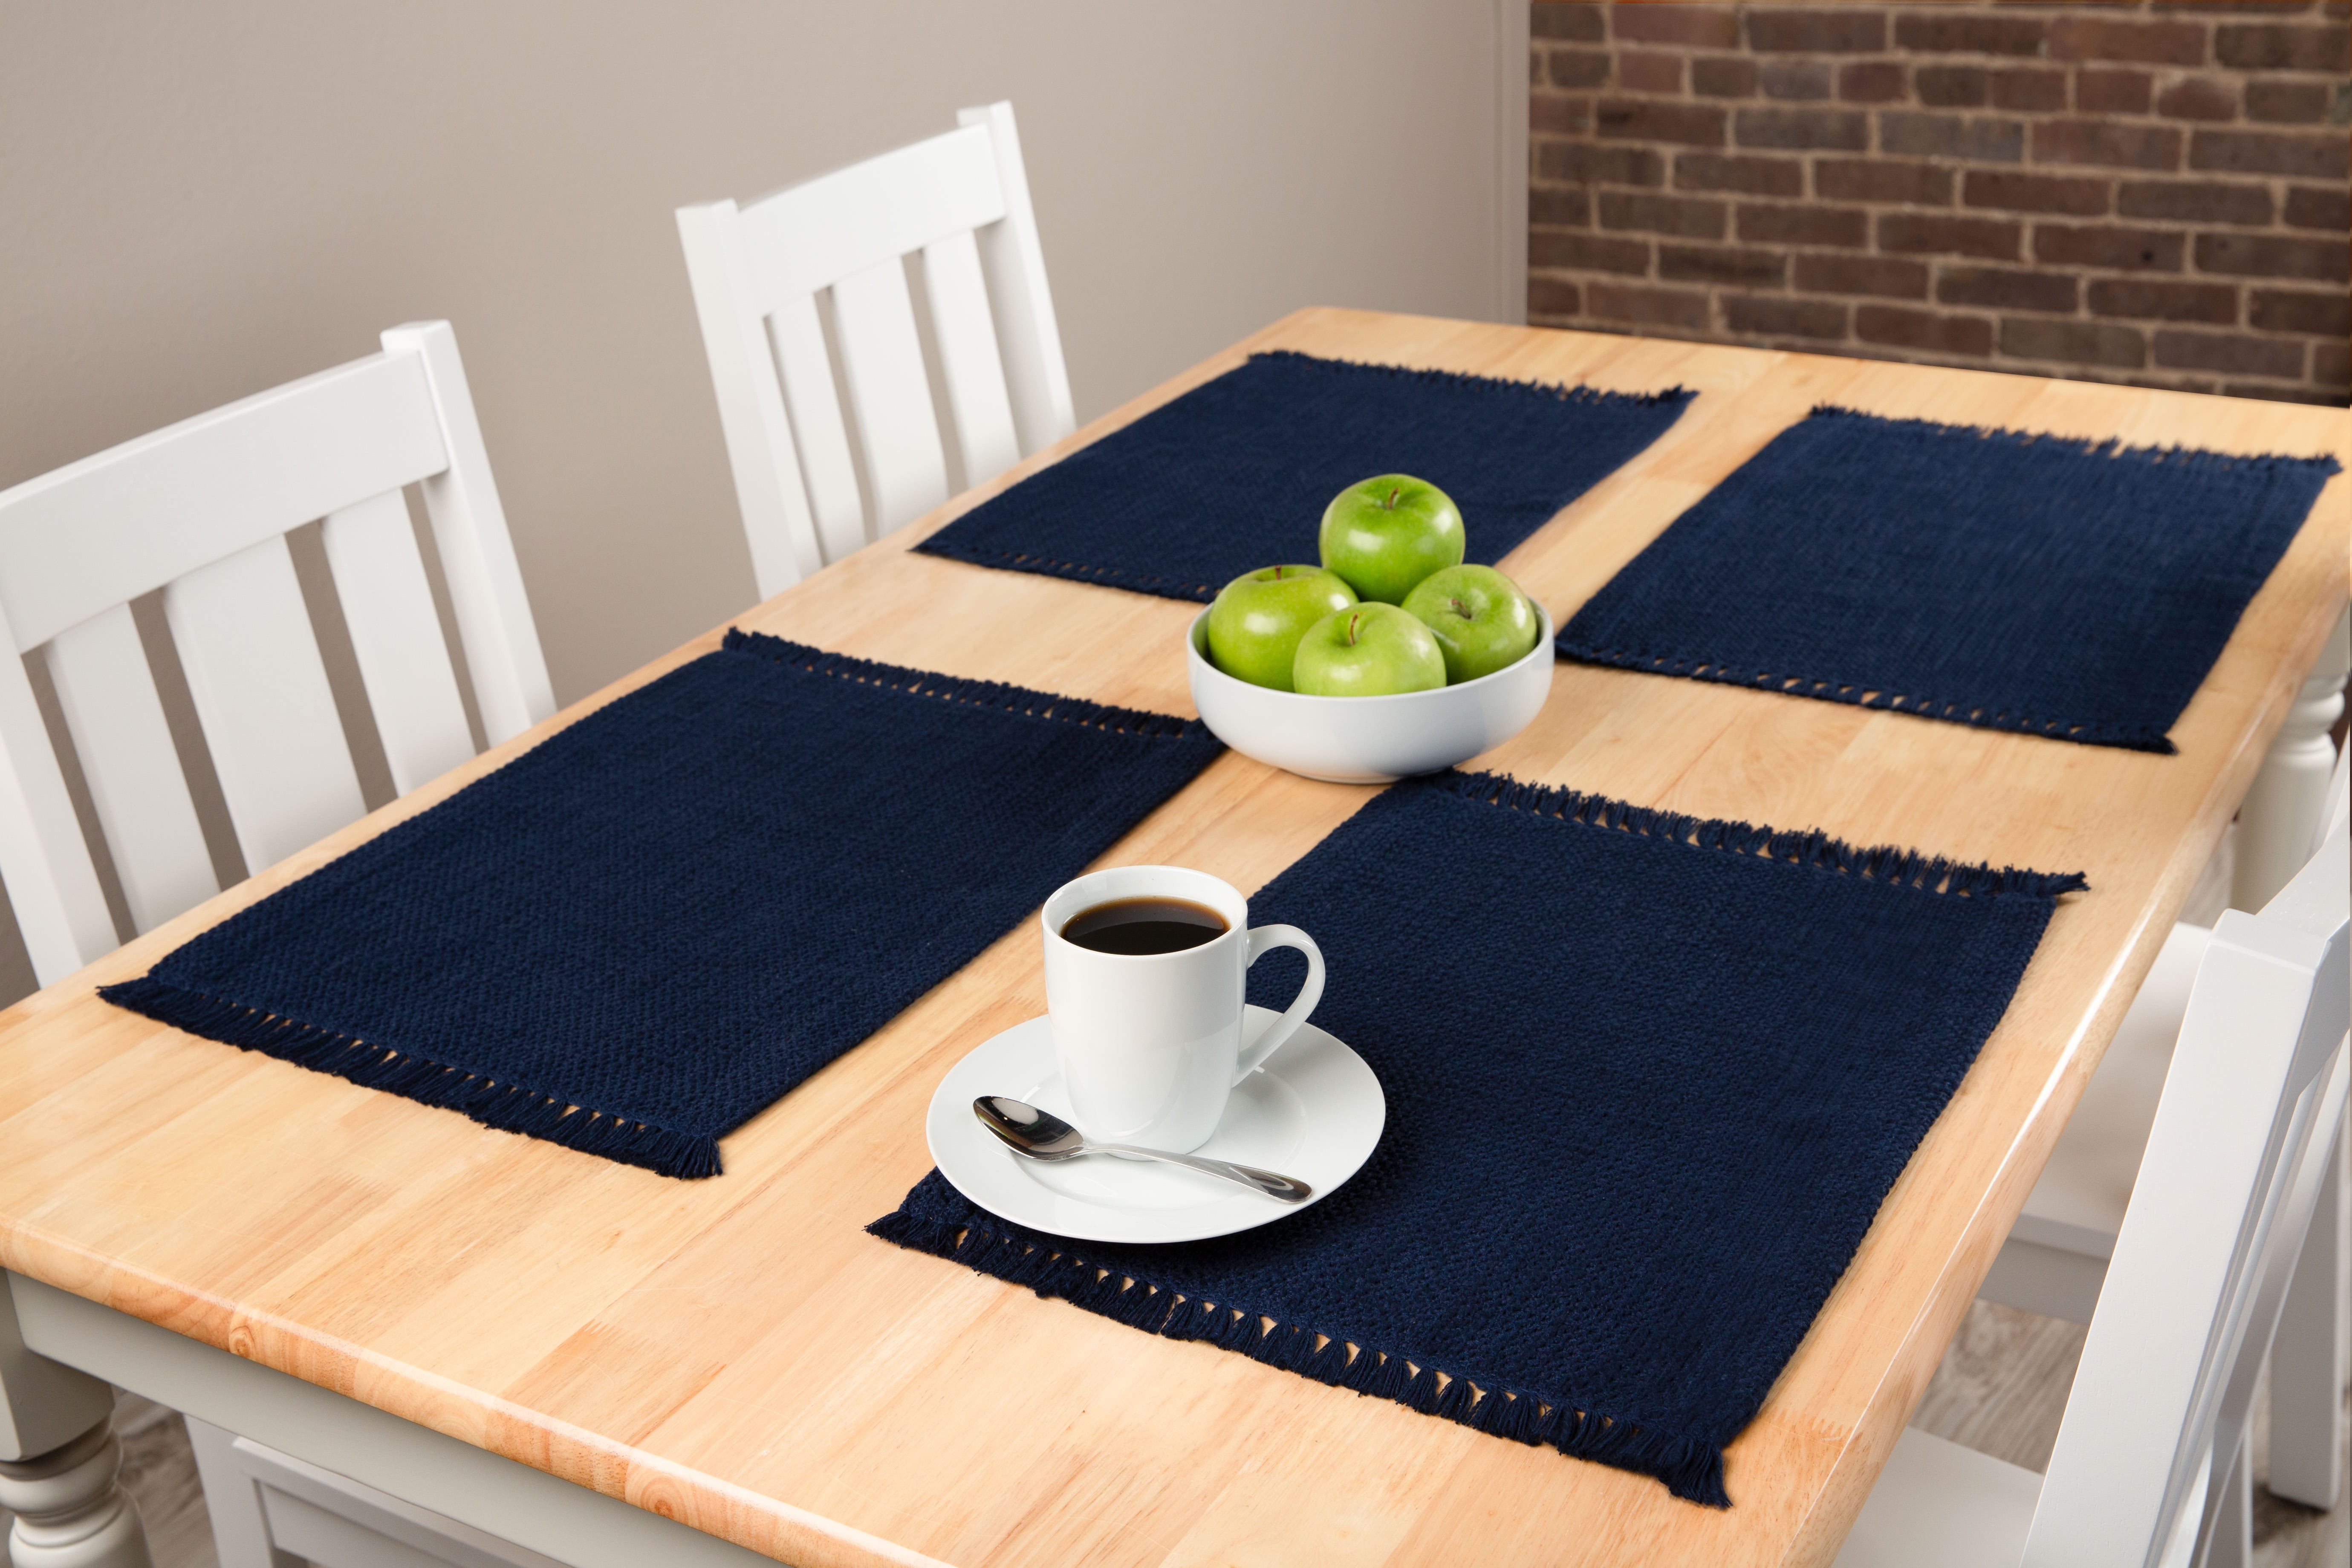 Cotton Linen Elegant Placemats Khaki/ Coffee/ Blue Dining Table